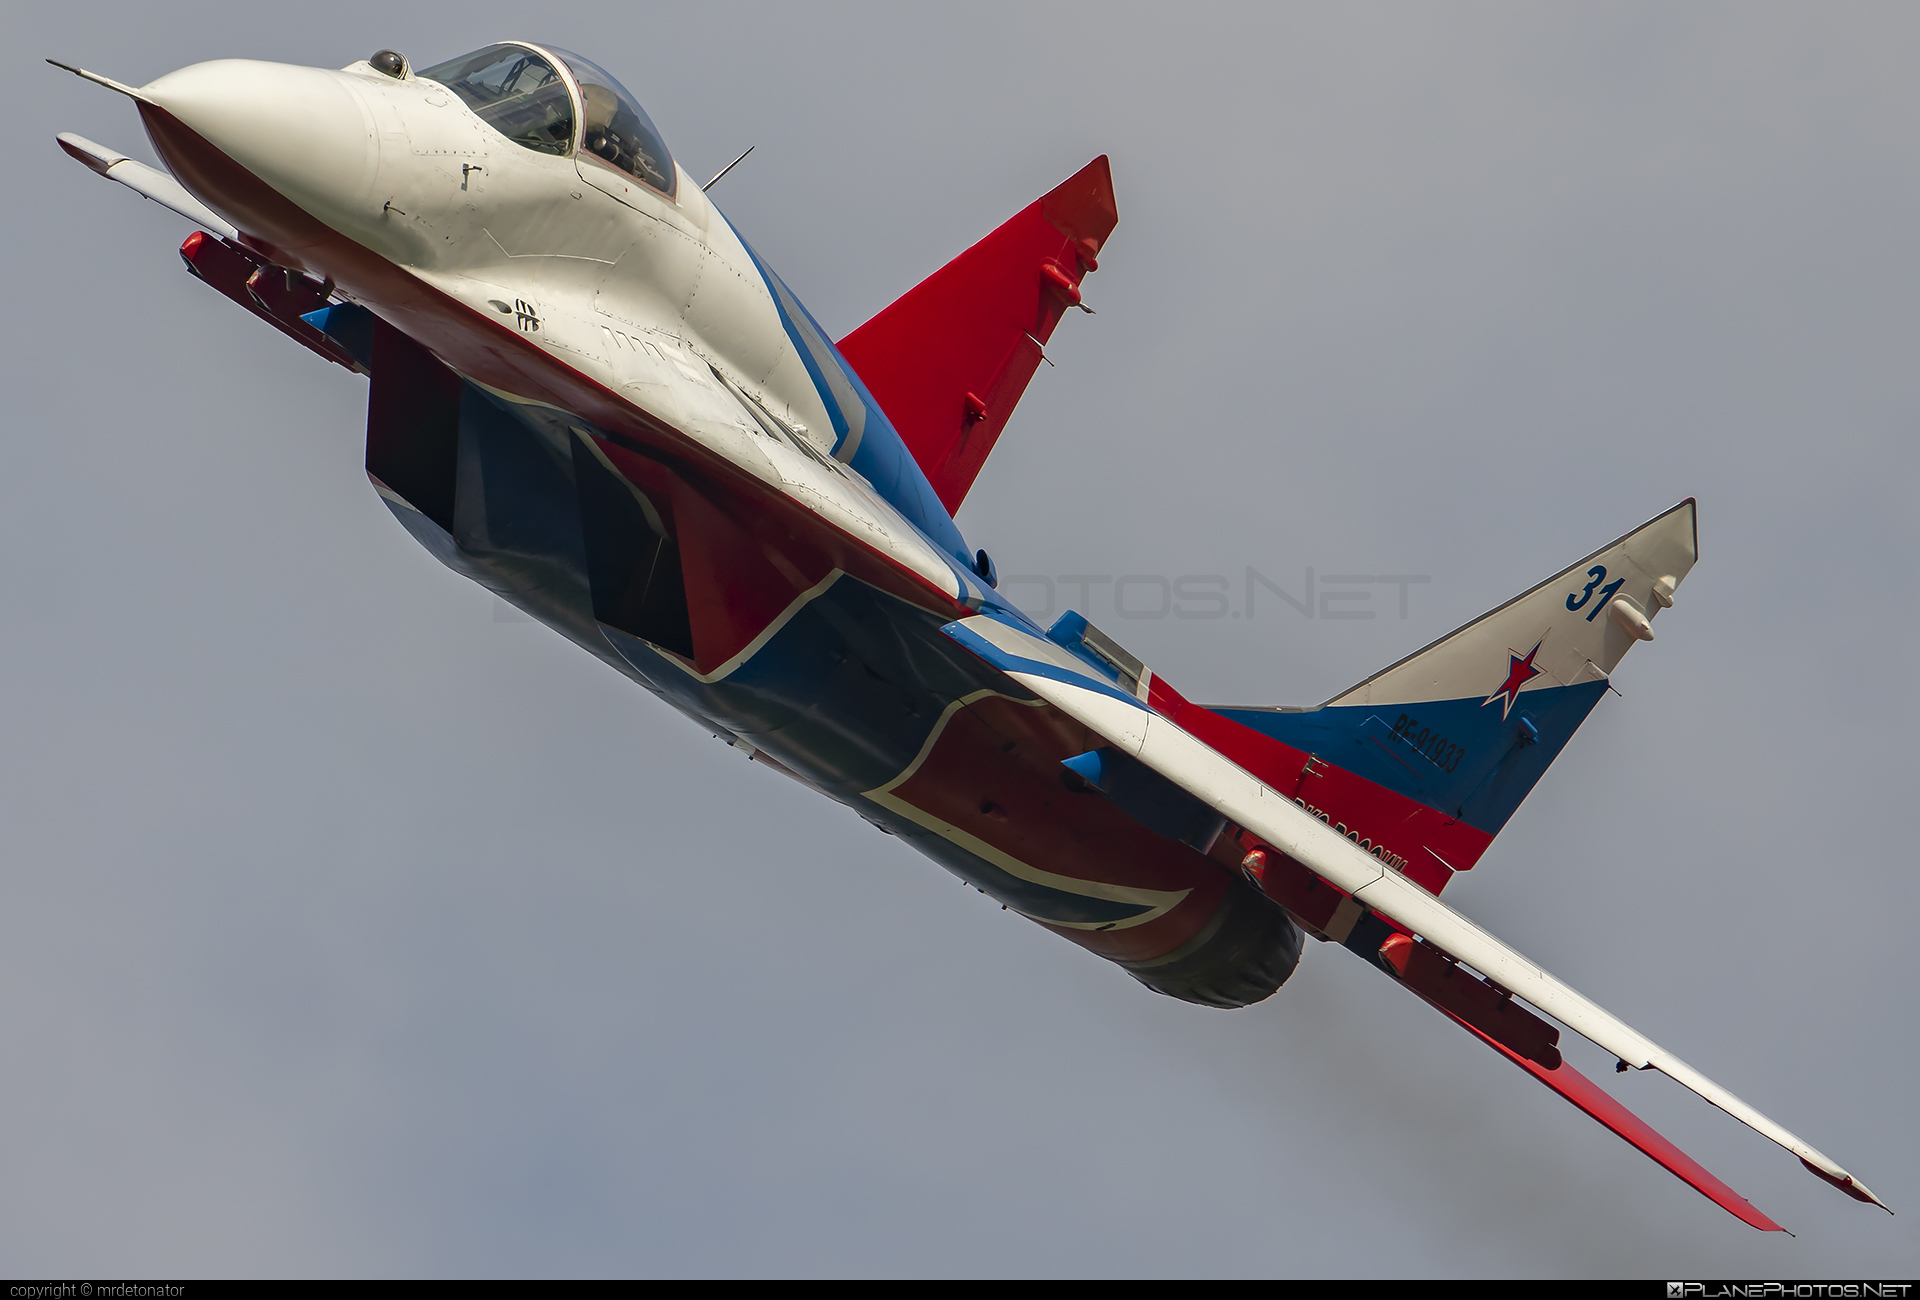 Mikoyan-Gurevich MiG-29S - RF-91933 operated by Vozdushno-kosmicheskiye sily Rossii (Russian Aerospace Forces) #mig #mig29 #mig29s #mikoyangurevich #russianaerospaceforces #vozdushnokosmicheskiyesilyrossii